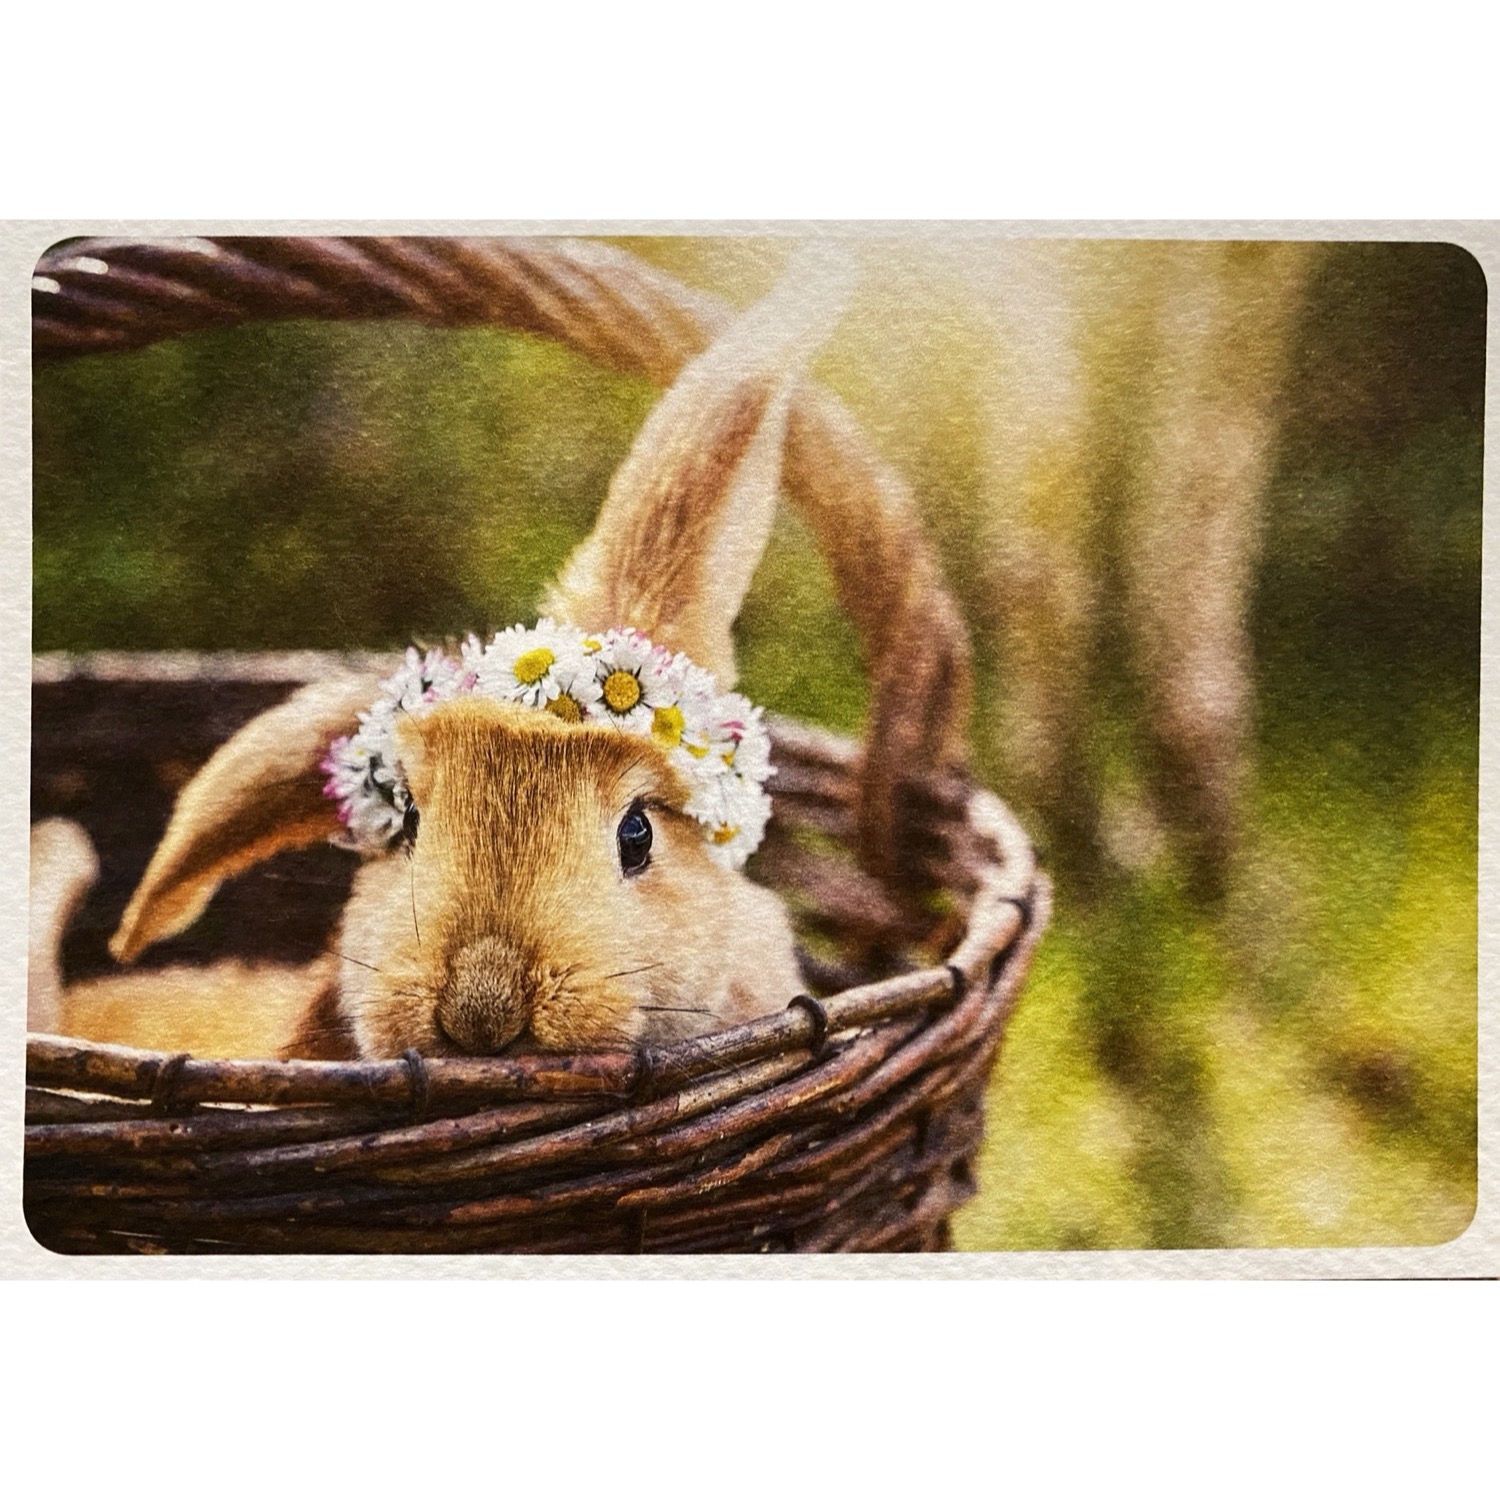 Postkarte - Taurus - Kopfschmuck - Hase im Korb - PK 6736